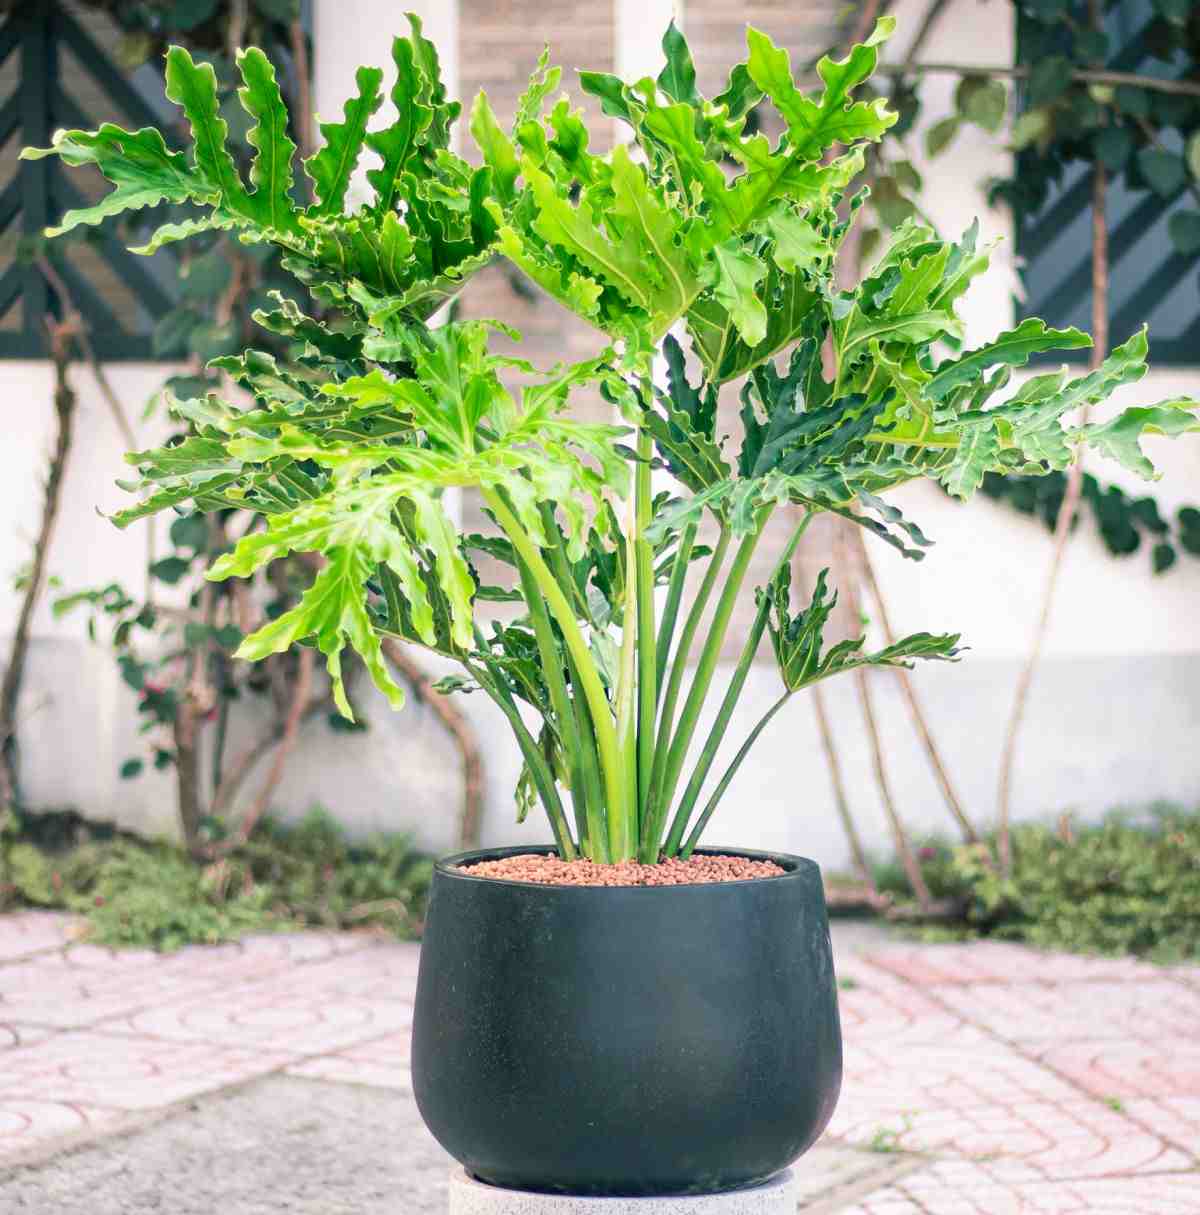 Split leaf philodendron in a black pot in an atrium.